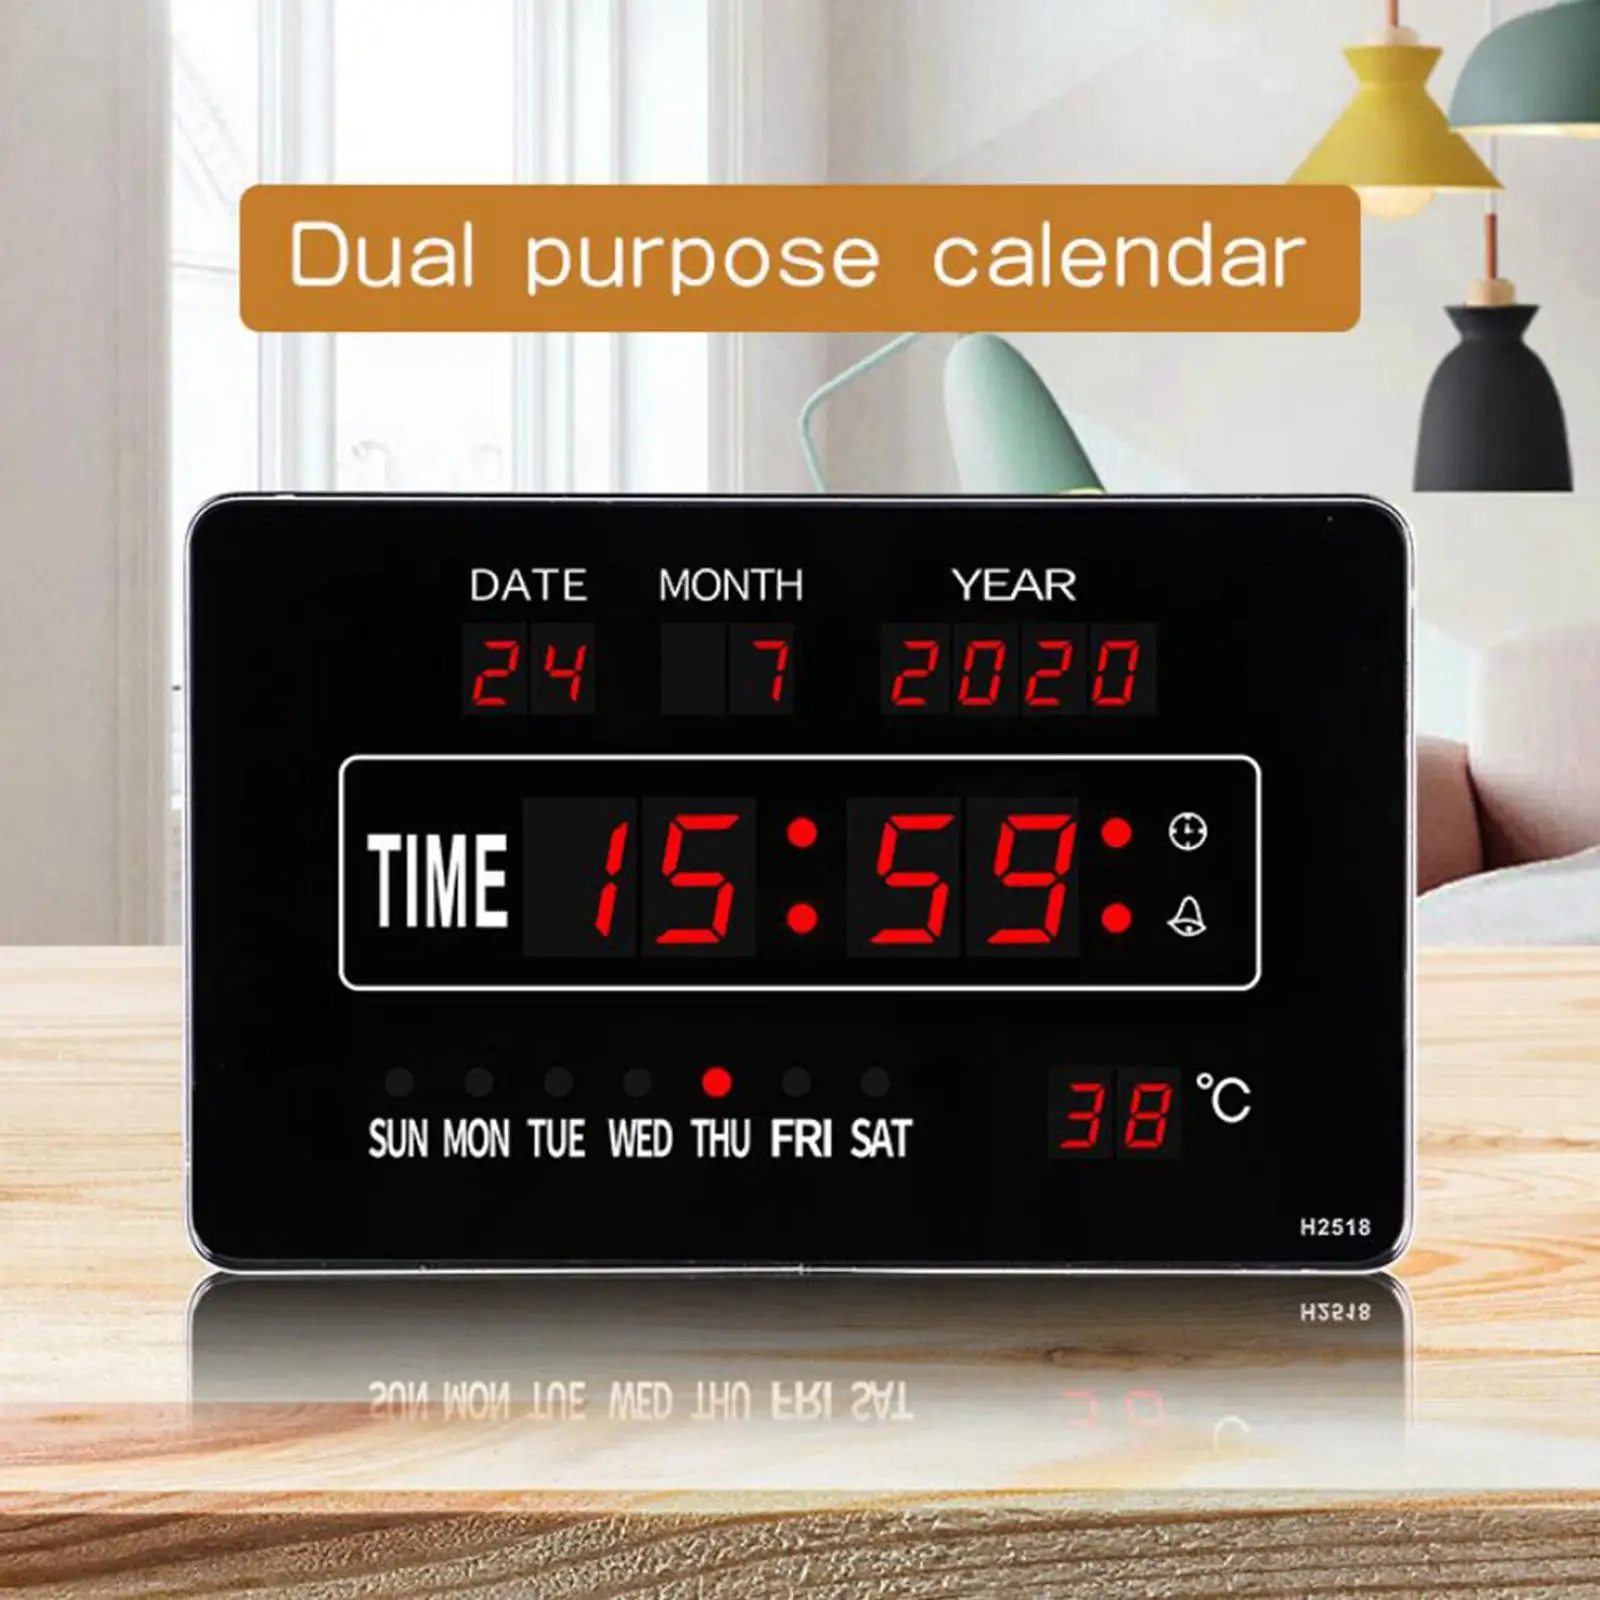 Digital Alarm Clock Desktop Bedside Wall Clock for Bedroom Living Room